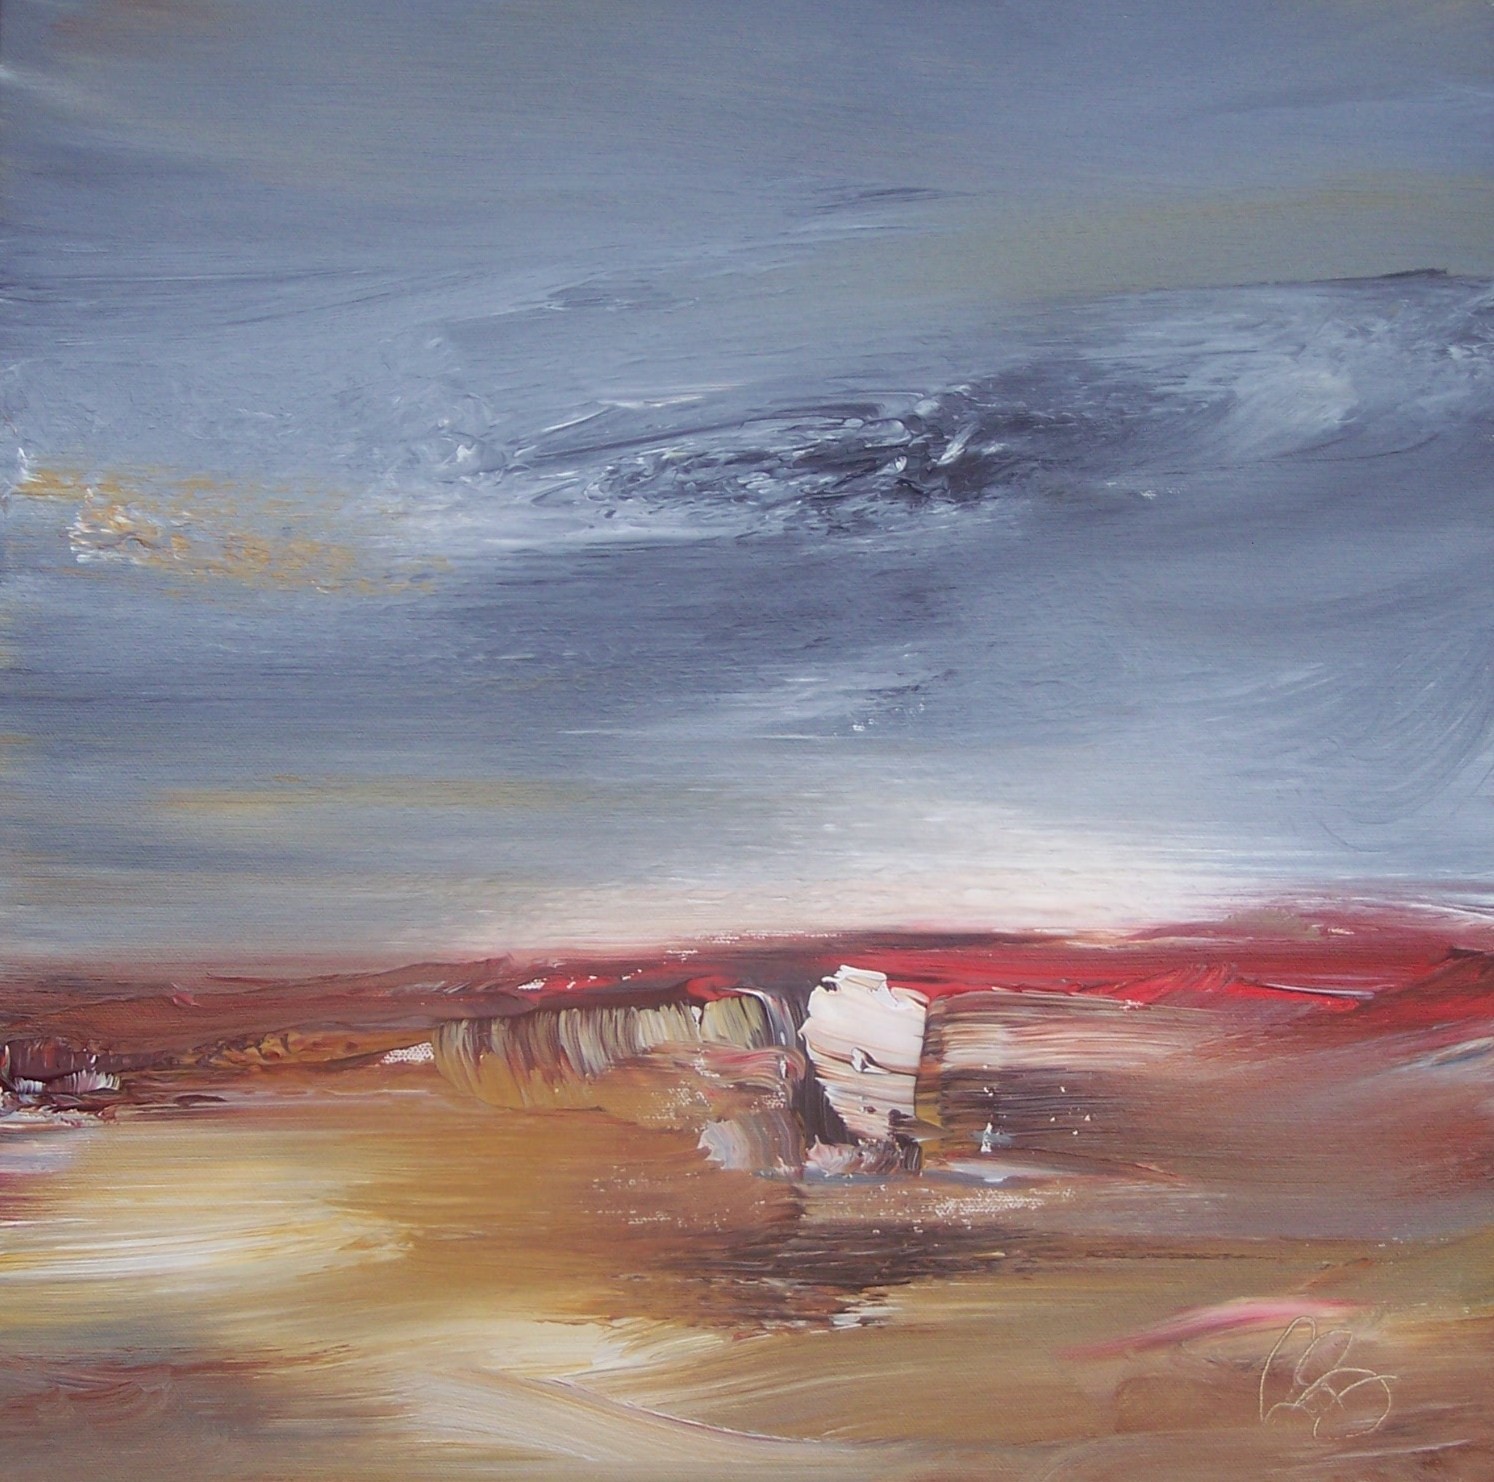 'clouded dunes' by artist Rosanne Barr